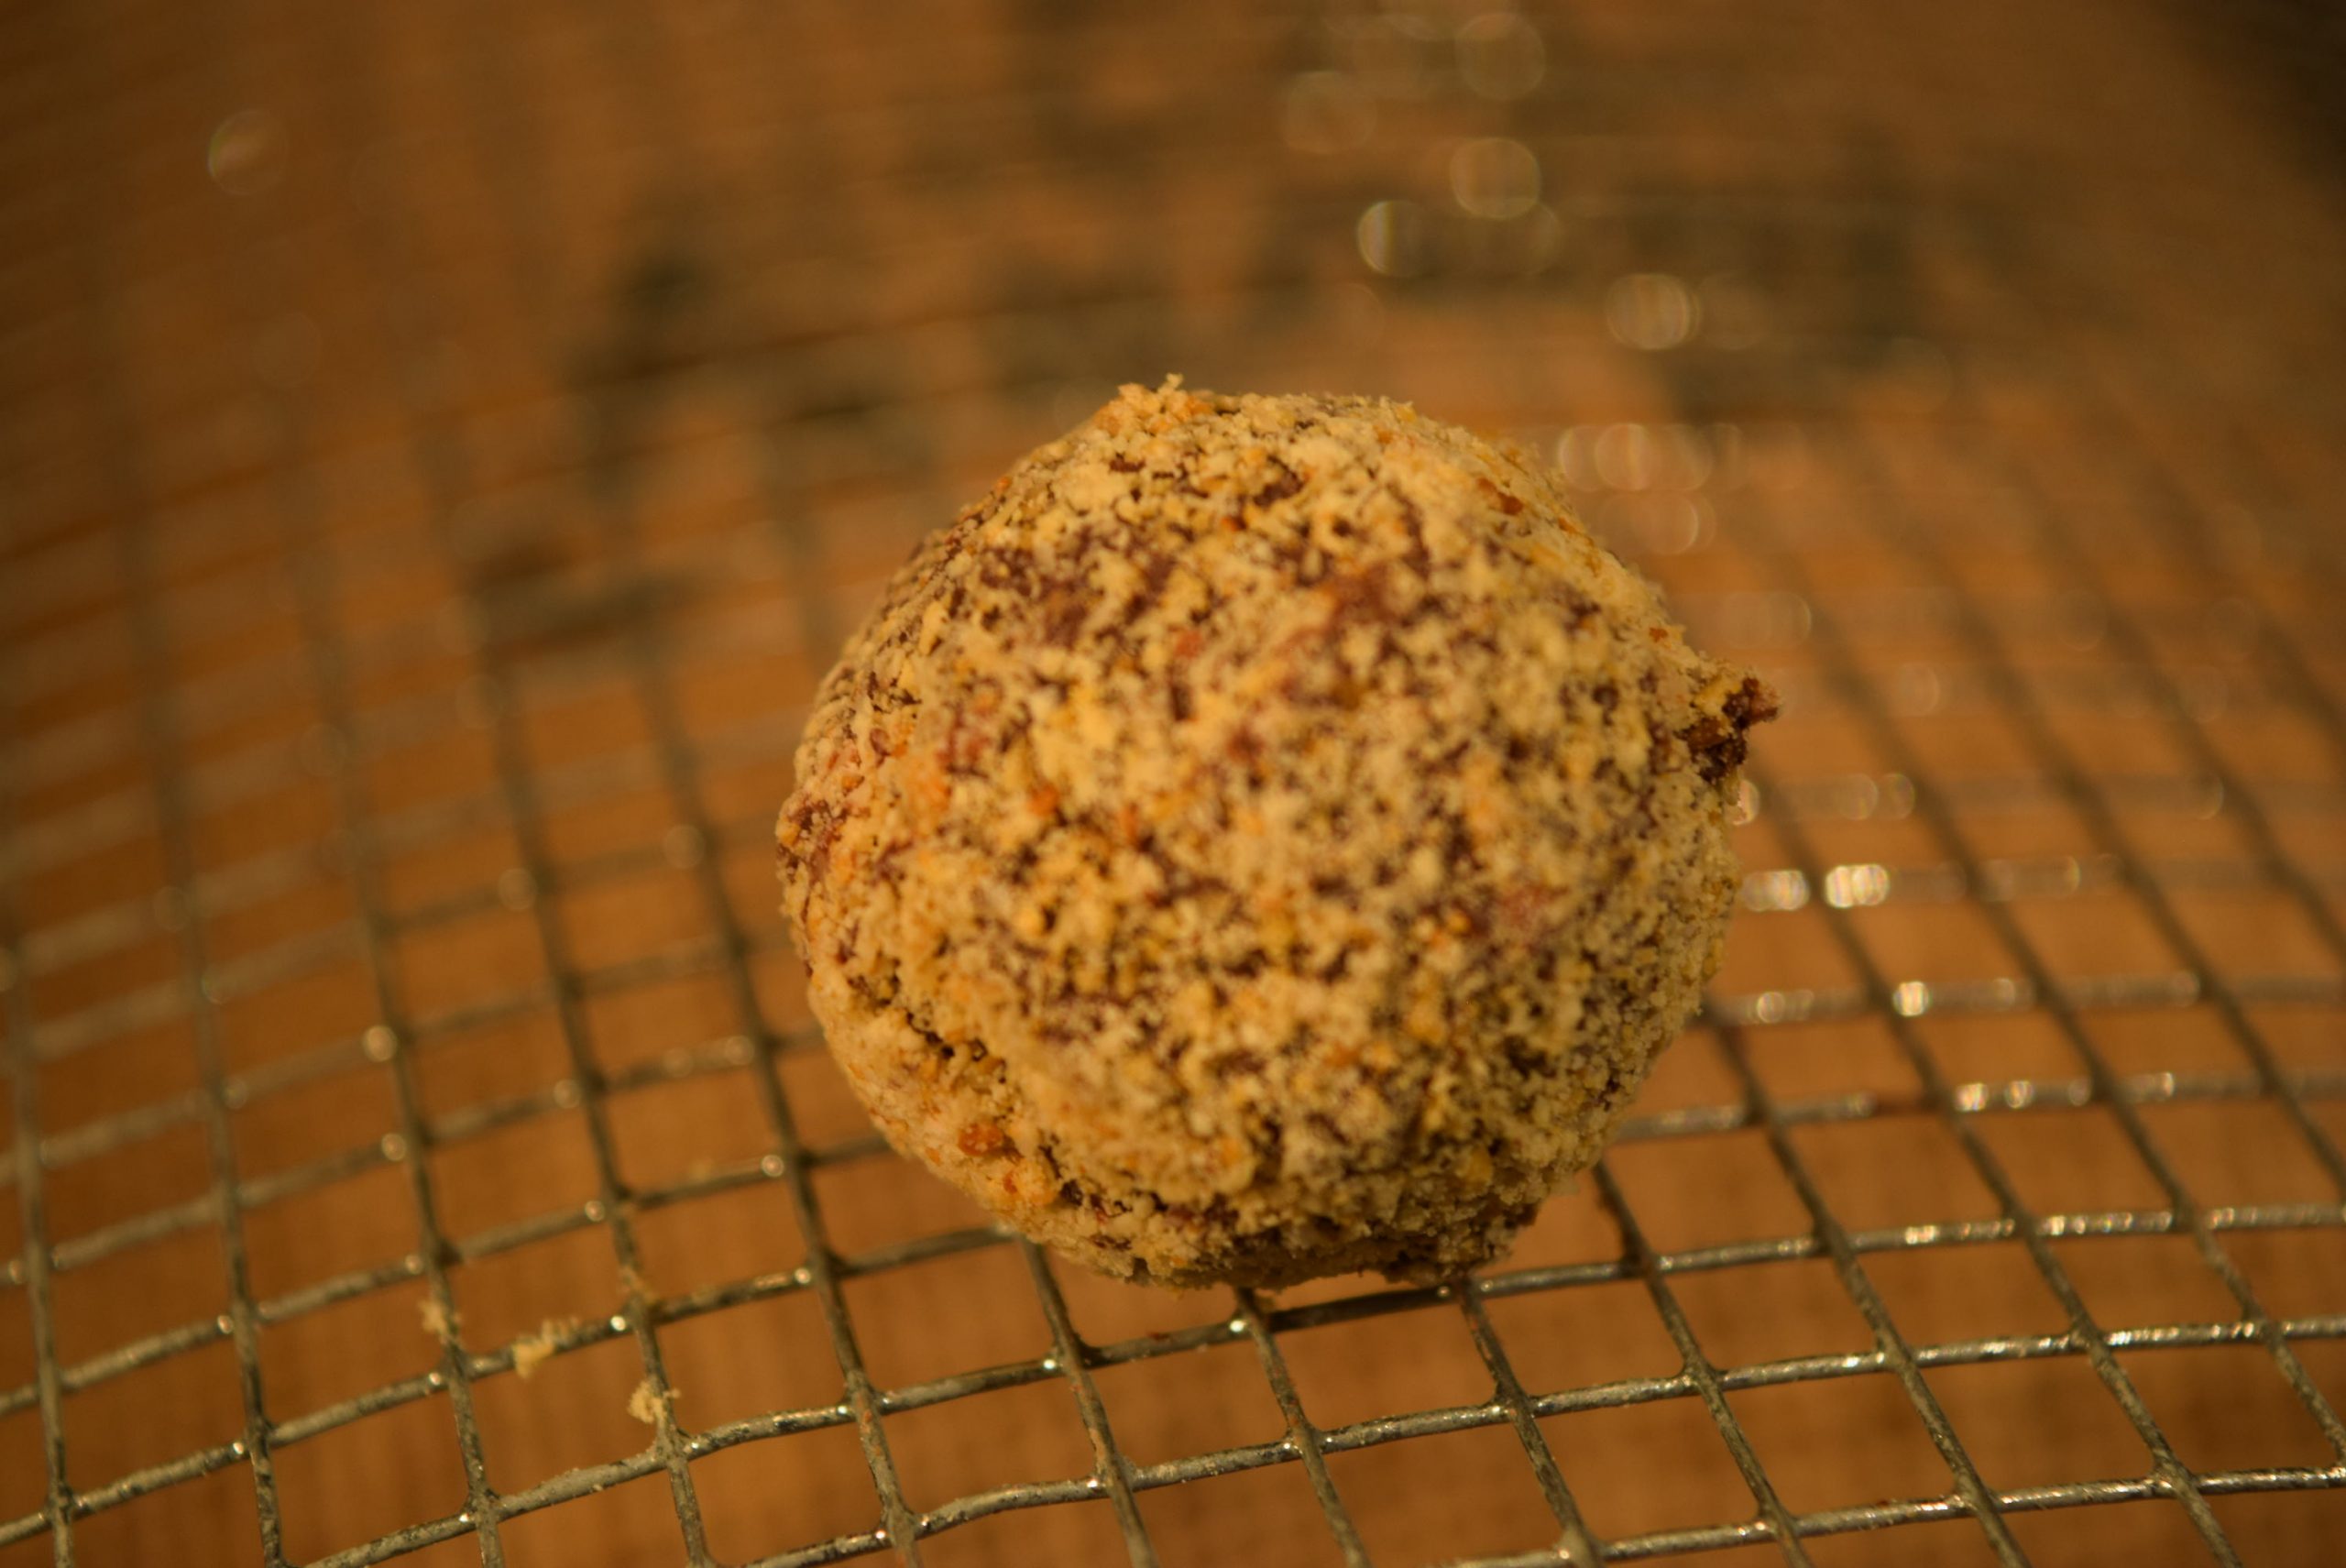 Almond truffle